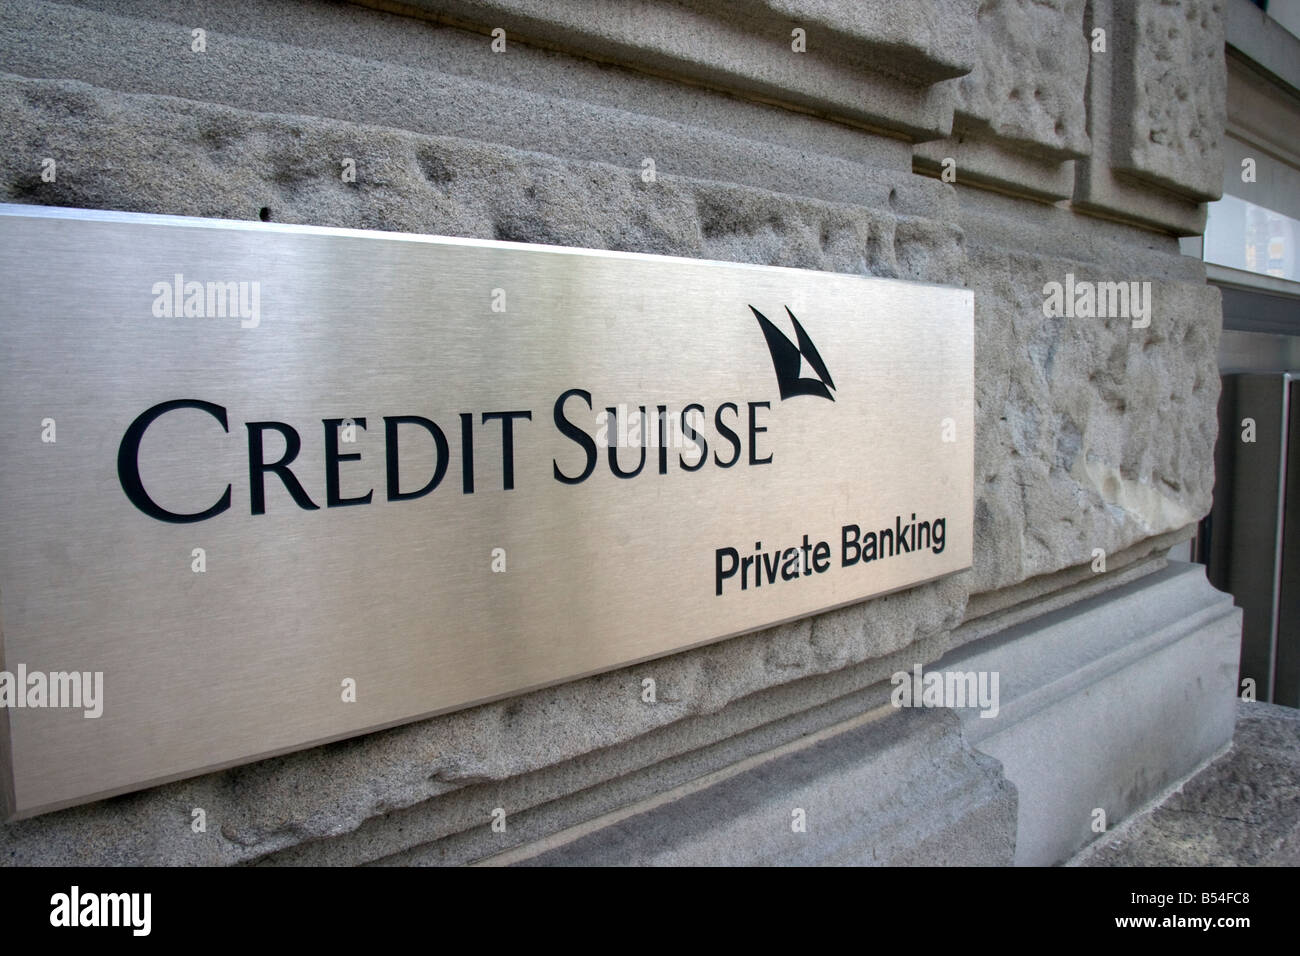 Credit Suisse, bank, private banking, Switzerland, swiss, Europe, european,money. Stock Photo